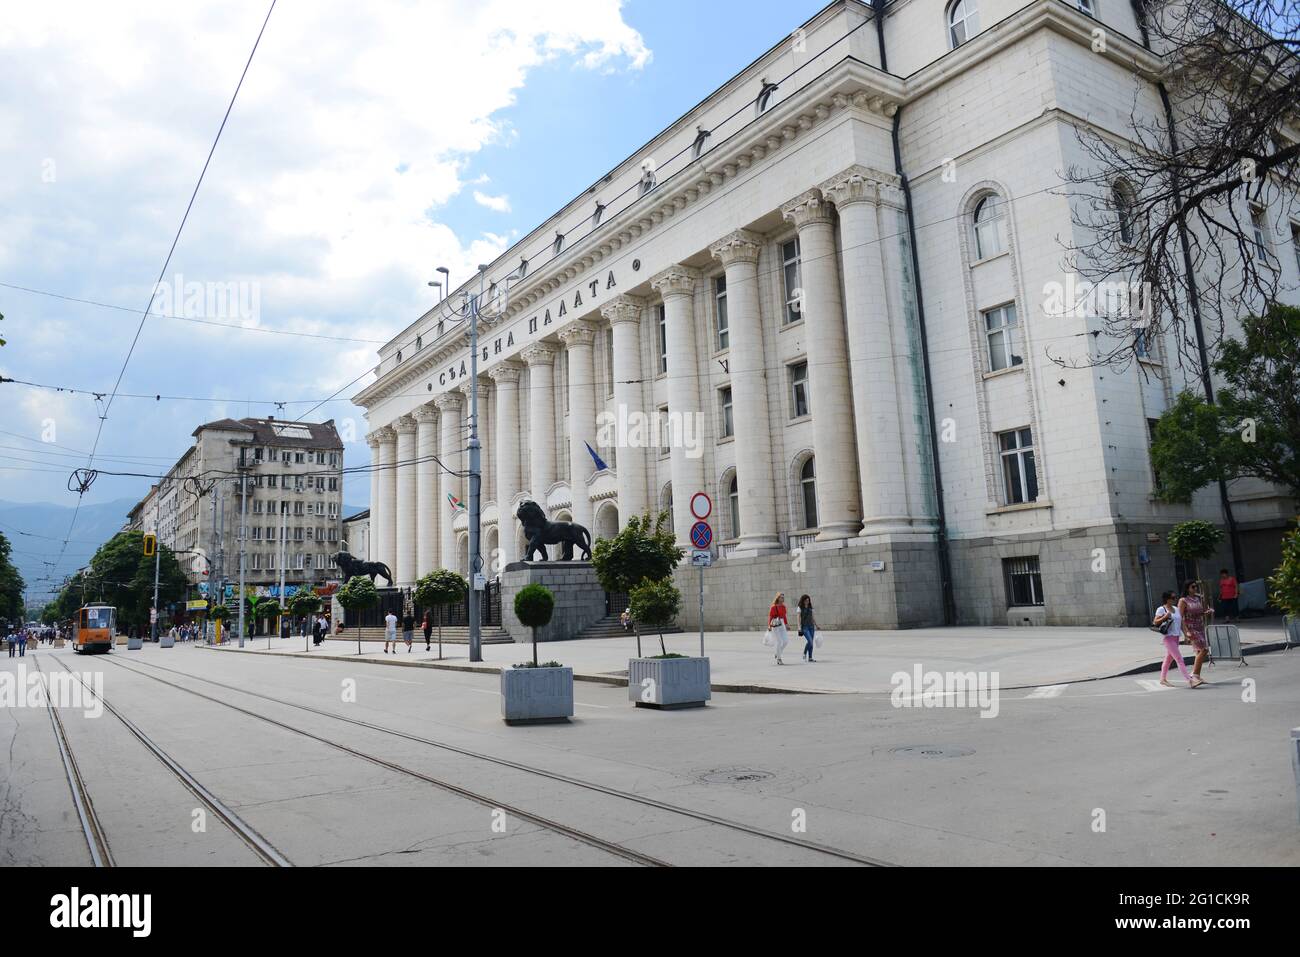 The court house in Sofia, Bulgaria. Stock Photo